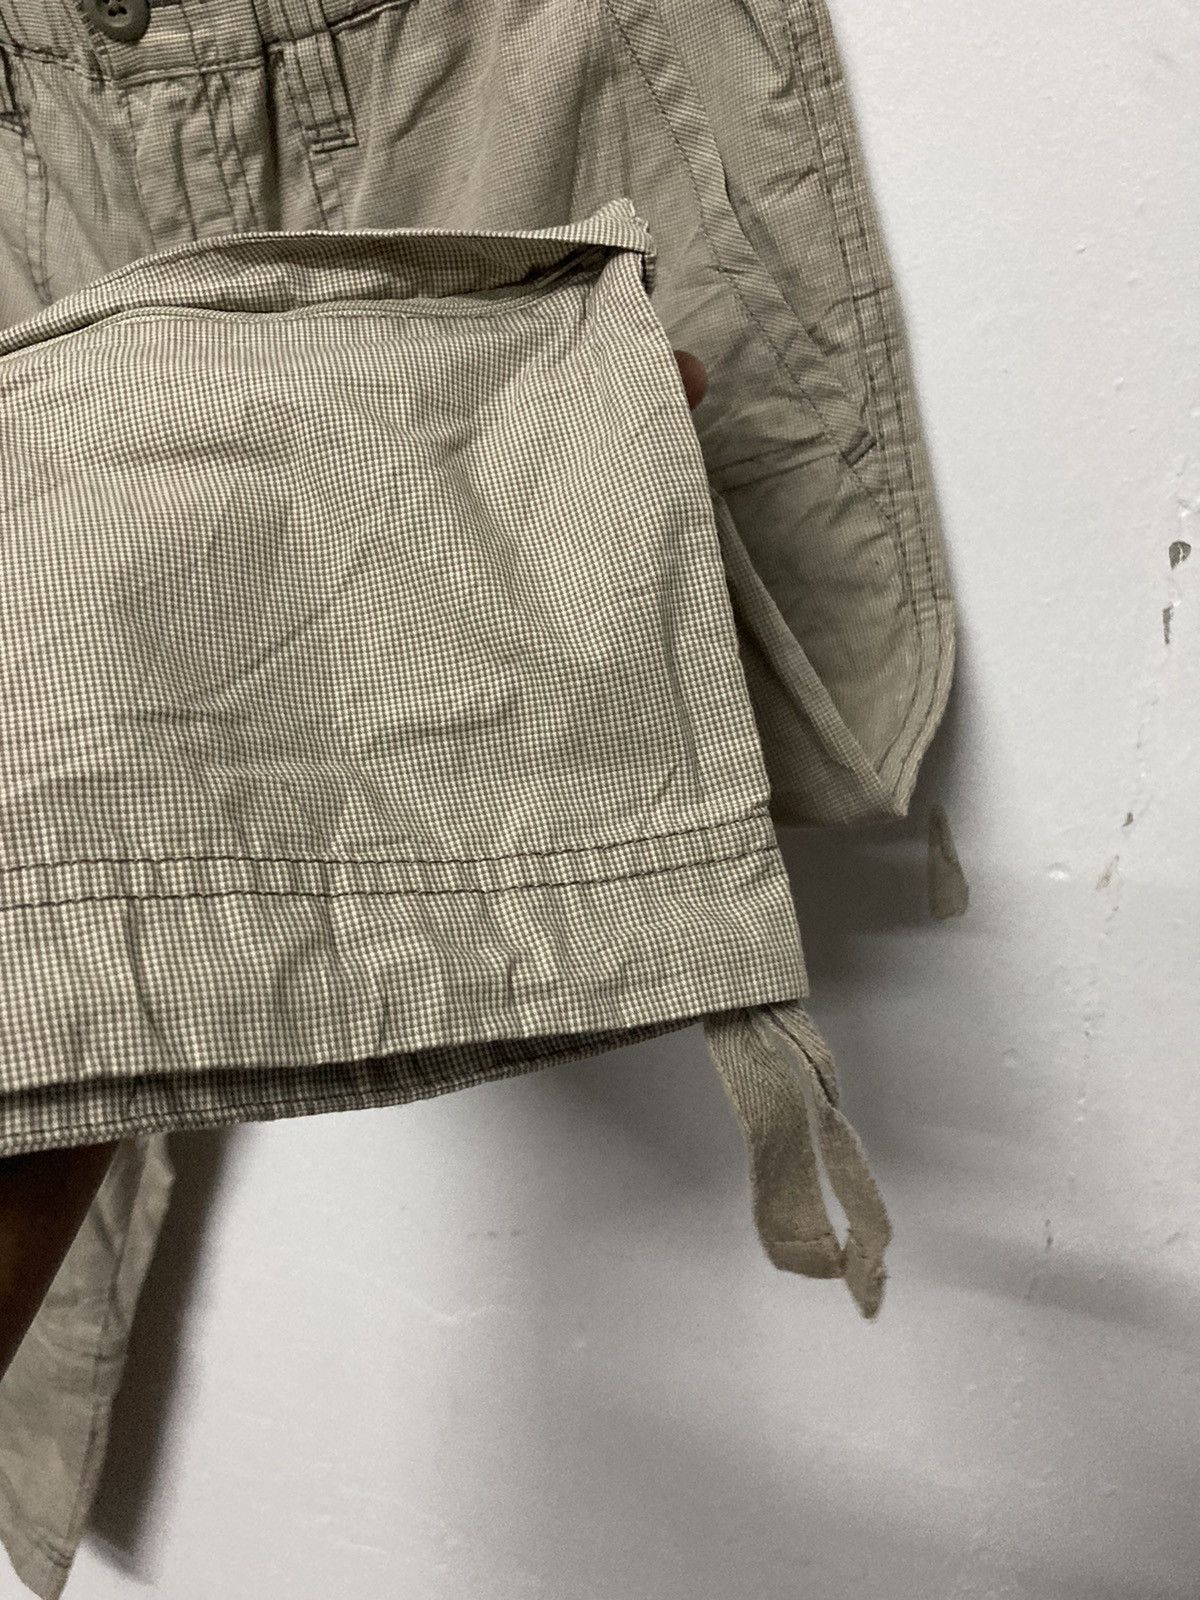 Vintage Uniqlo 3 Quarter Drawstring Pant Size Up to 32 - 9